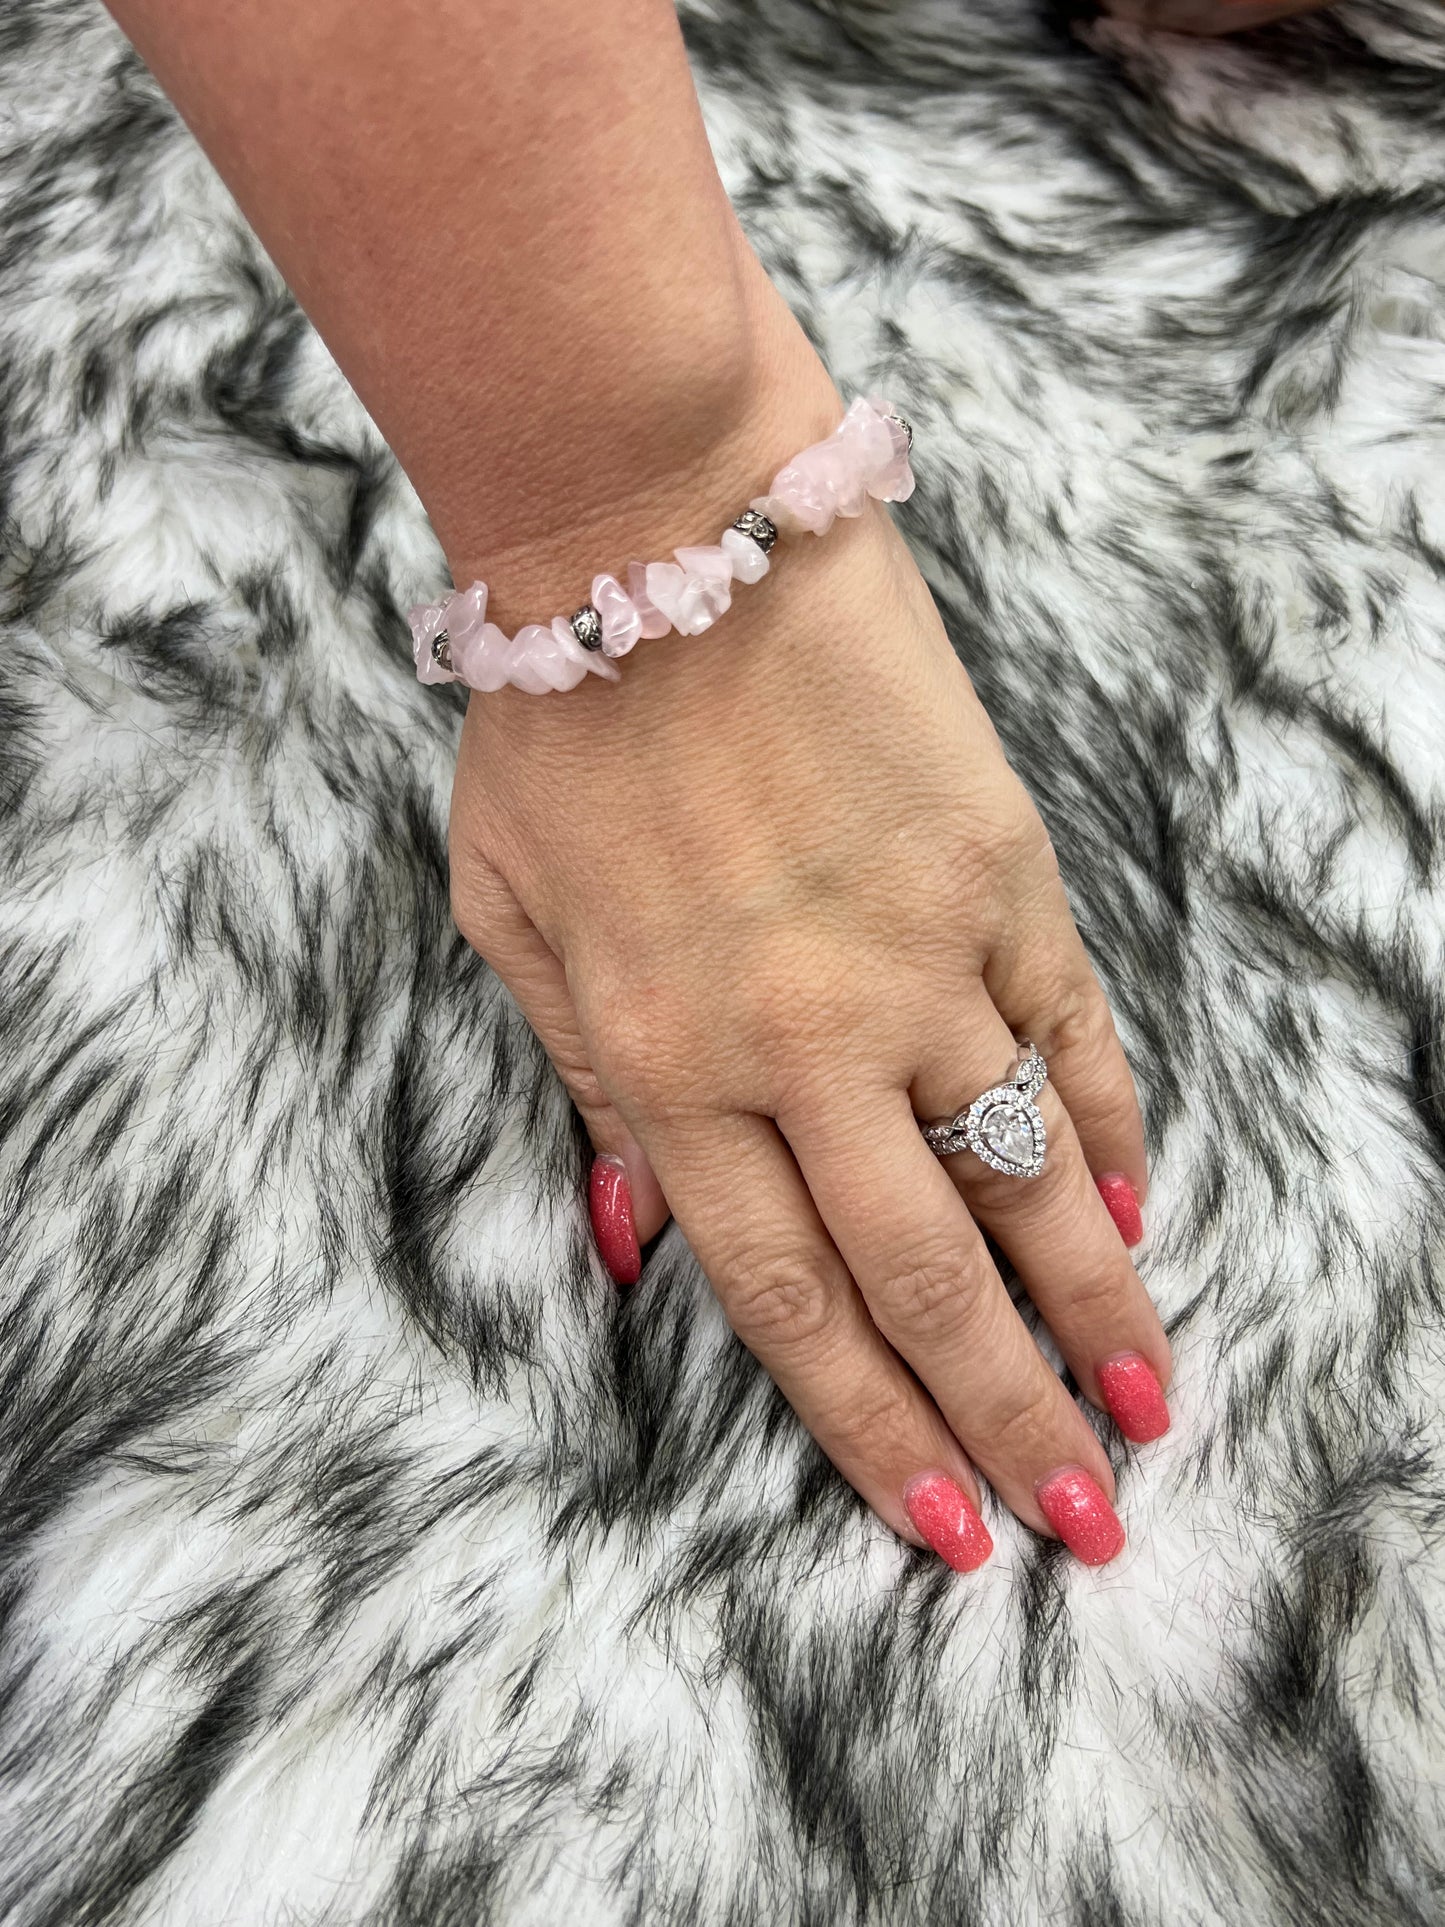 Handmade Natural Stone Crystal Bracelet